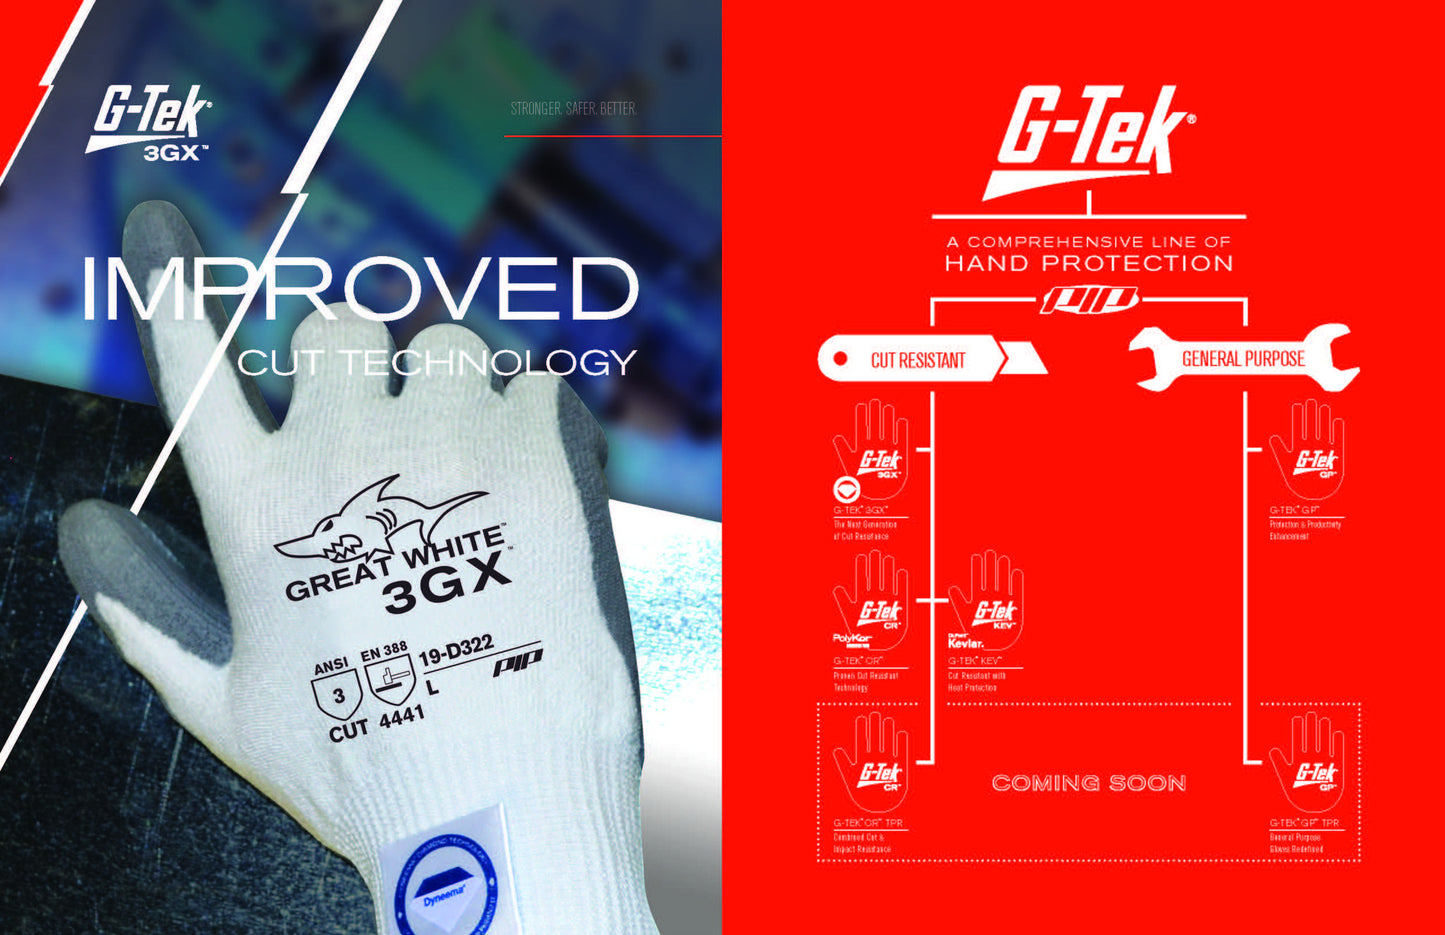 G-Tek® 3GX™ 19-D334 Dyneema Nitrile Coated Cut Resistant Gloves, Cut Level A3